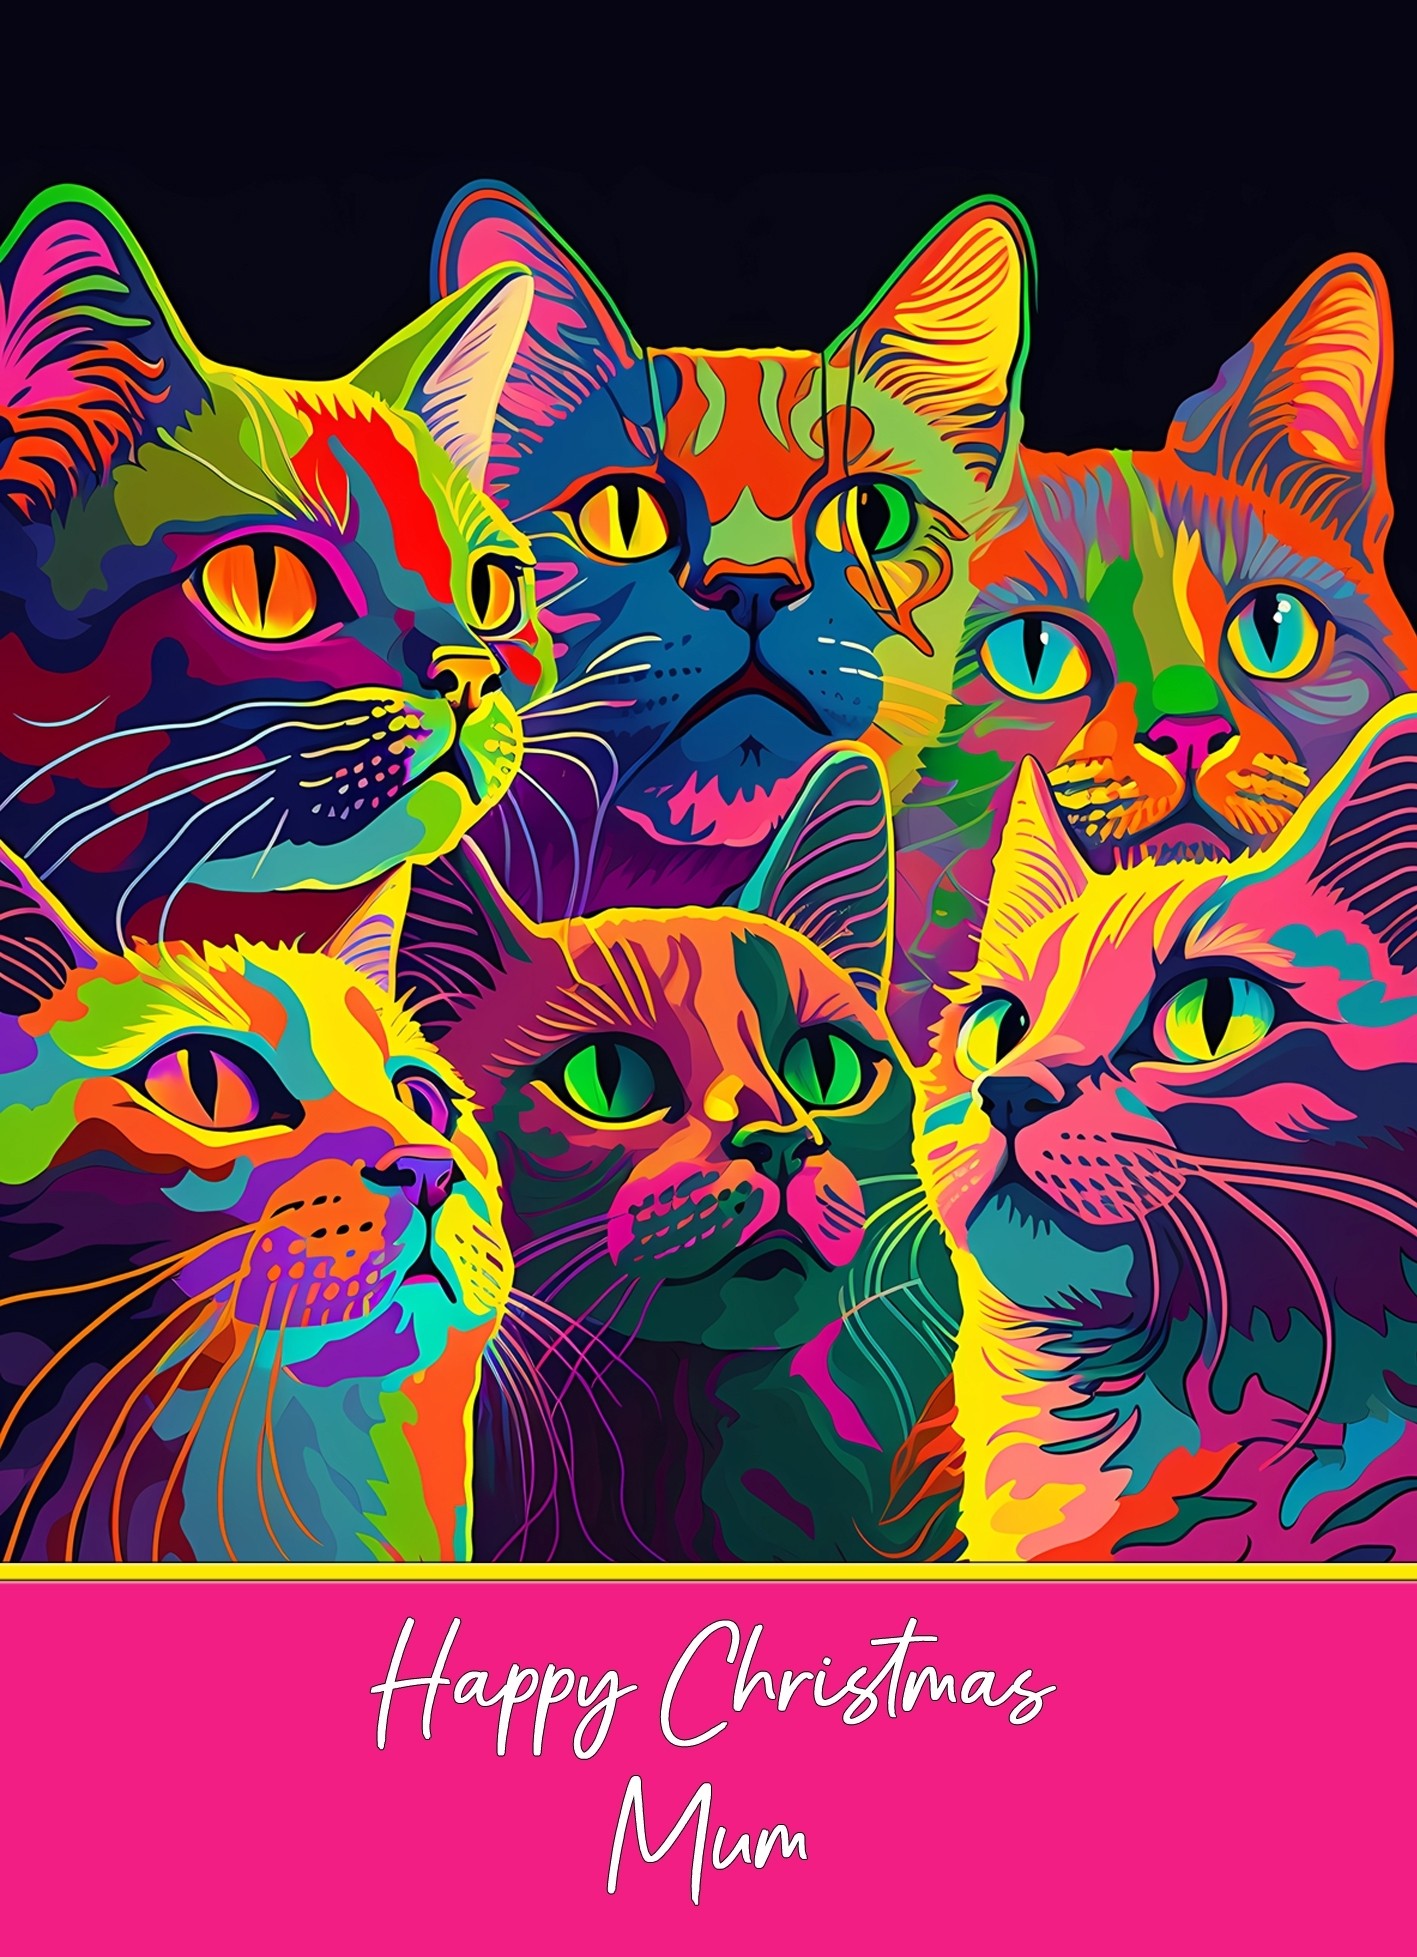 Christmas Card For Mum (Colourful Cat Art)